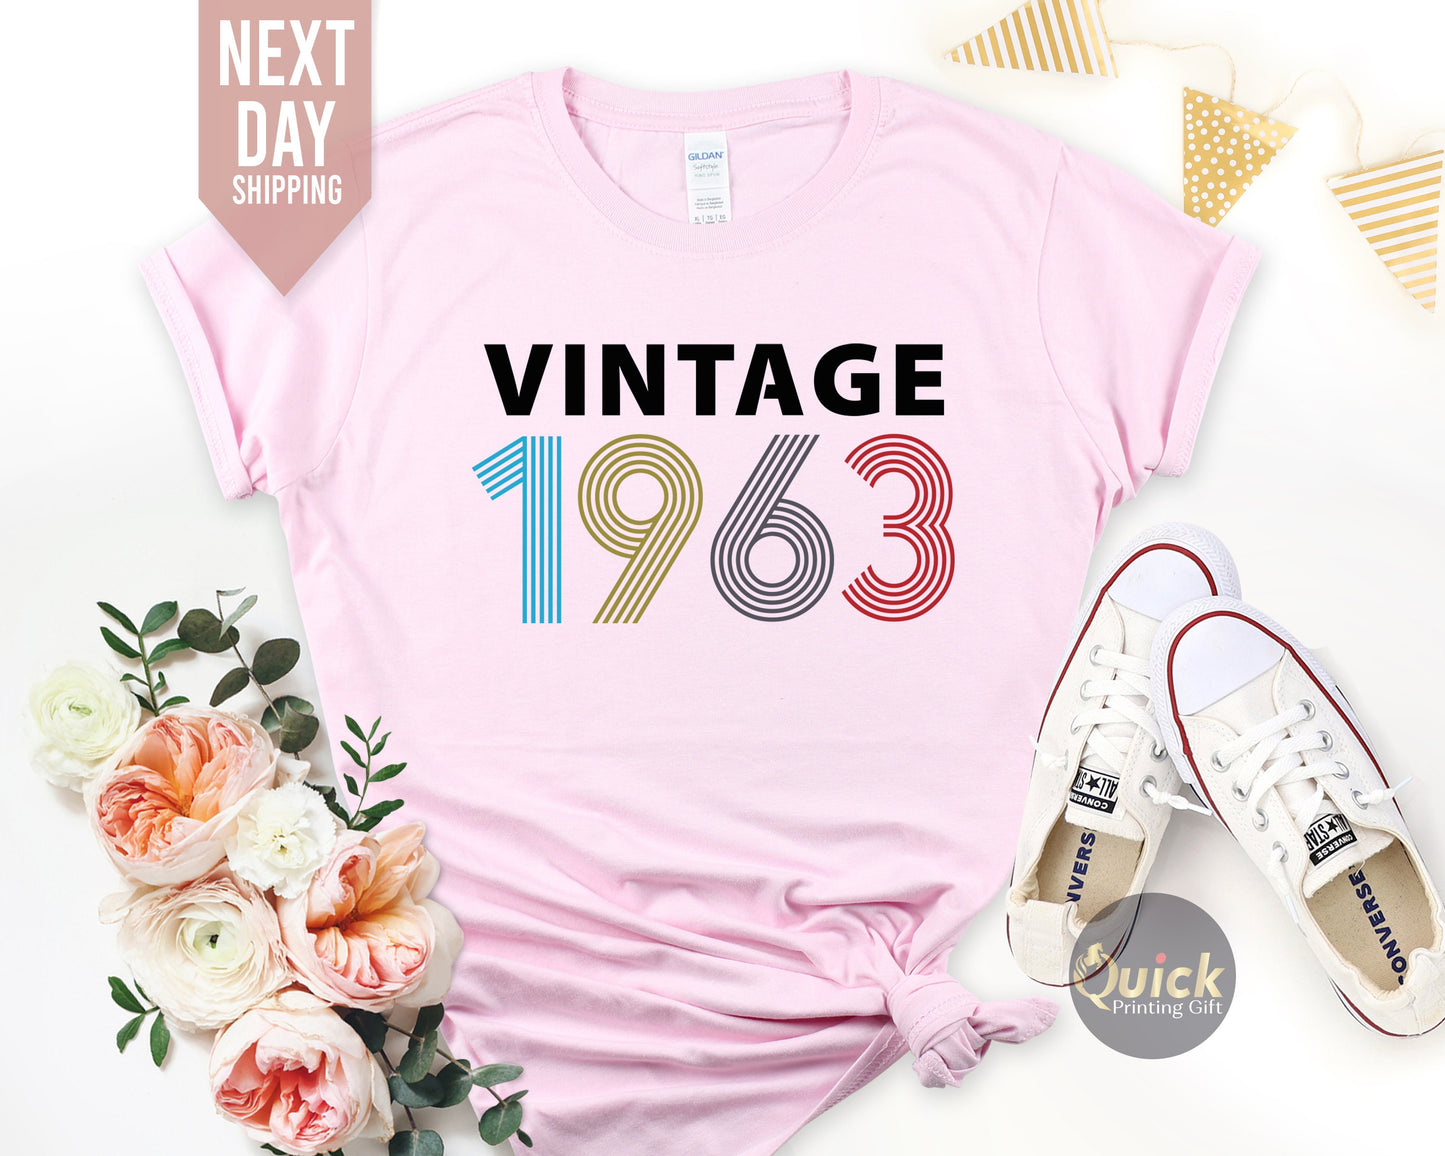  Vintage 1963 T-Shirt